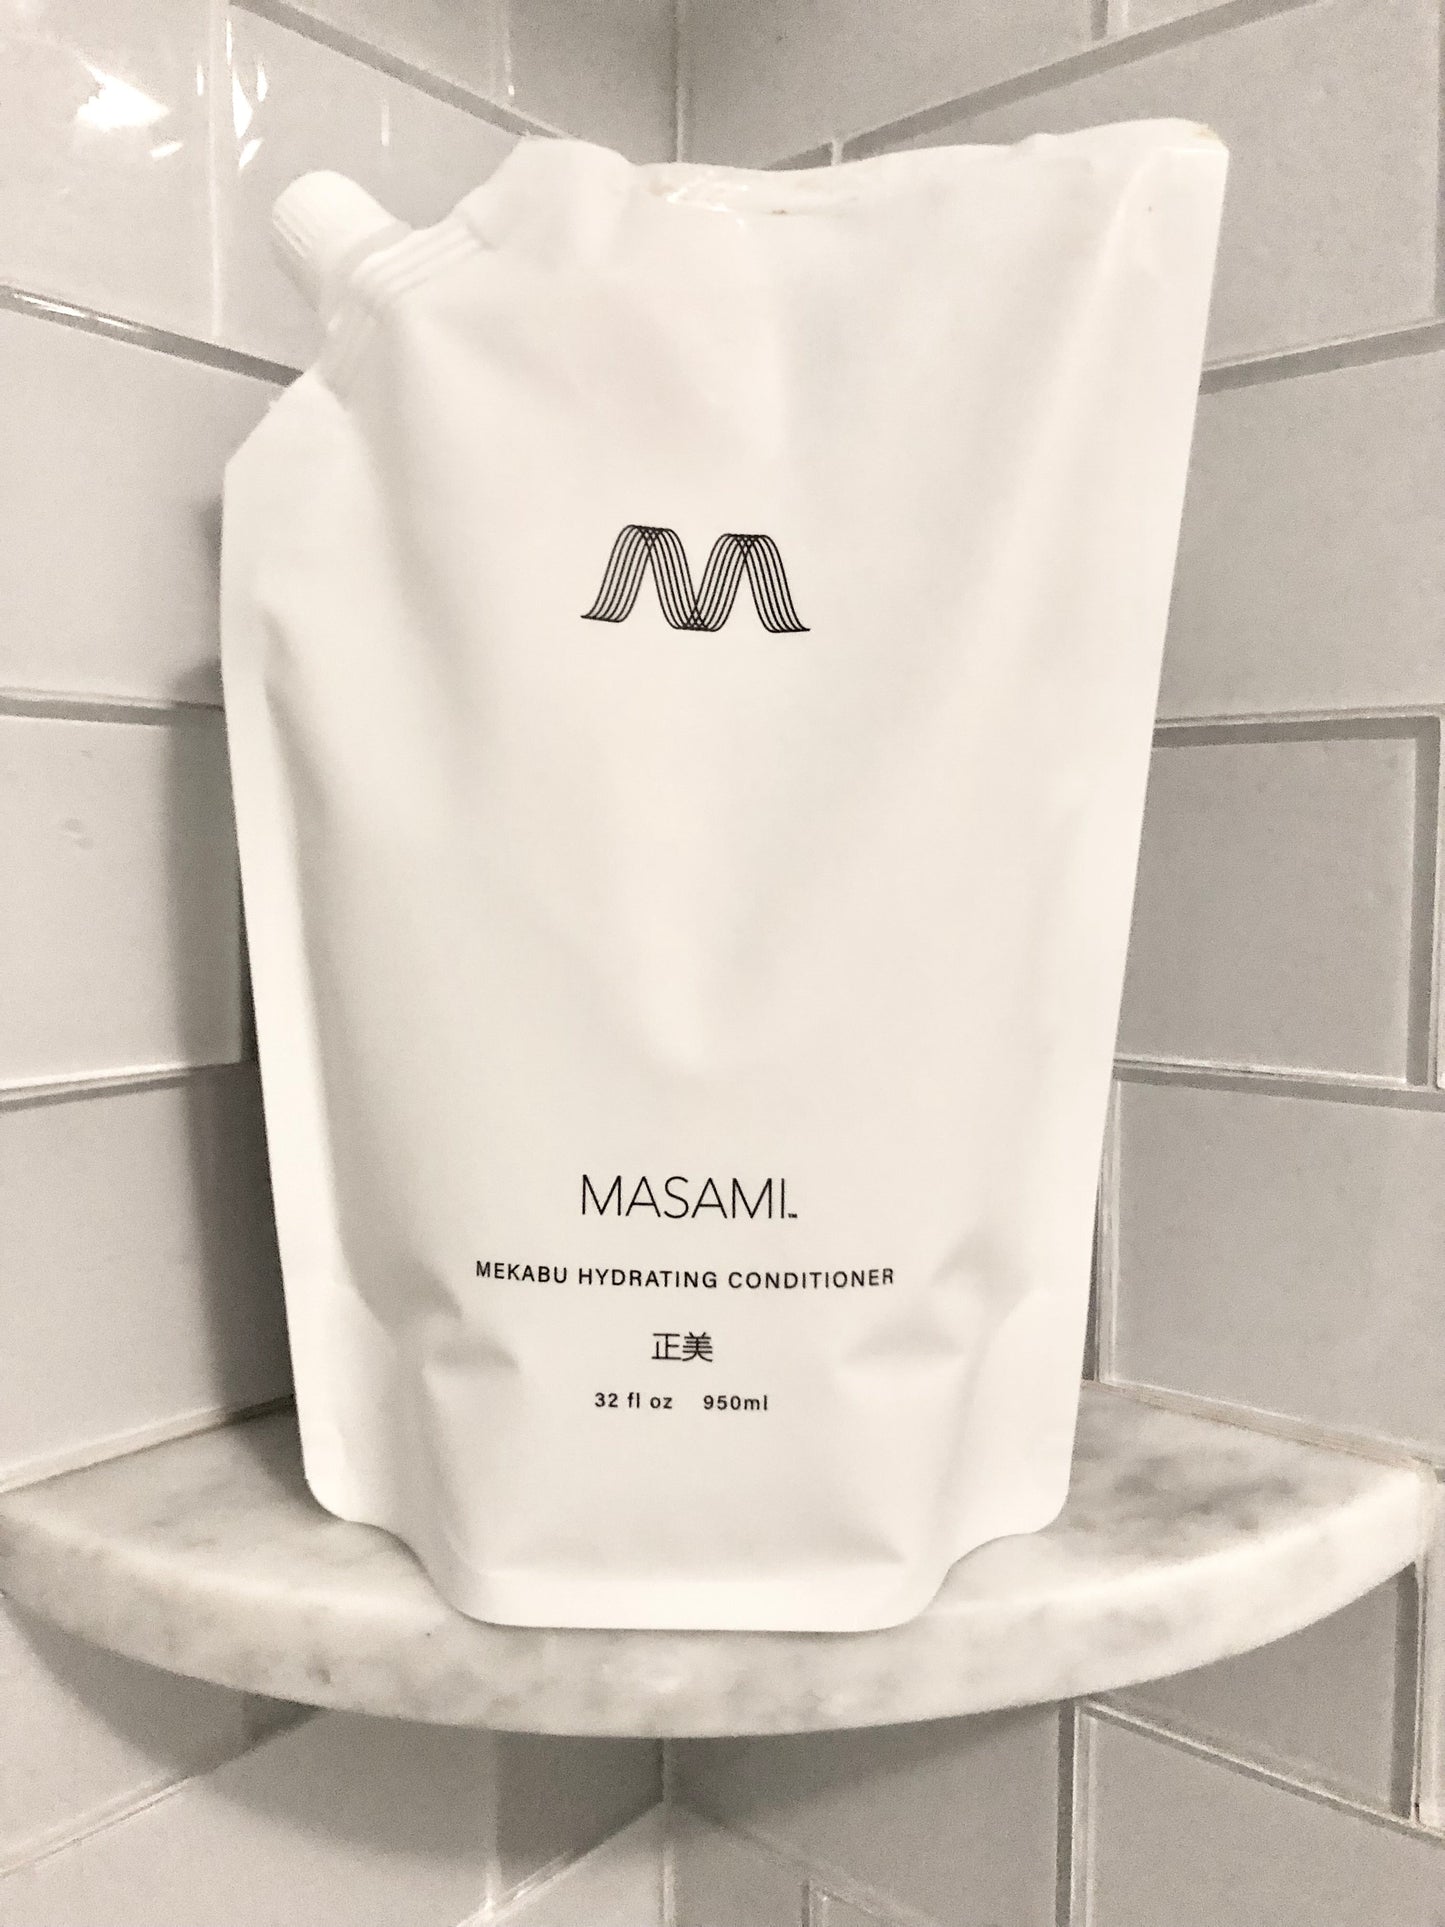 Mekabu Hydrating Conditioner Refill by Masami